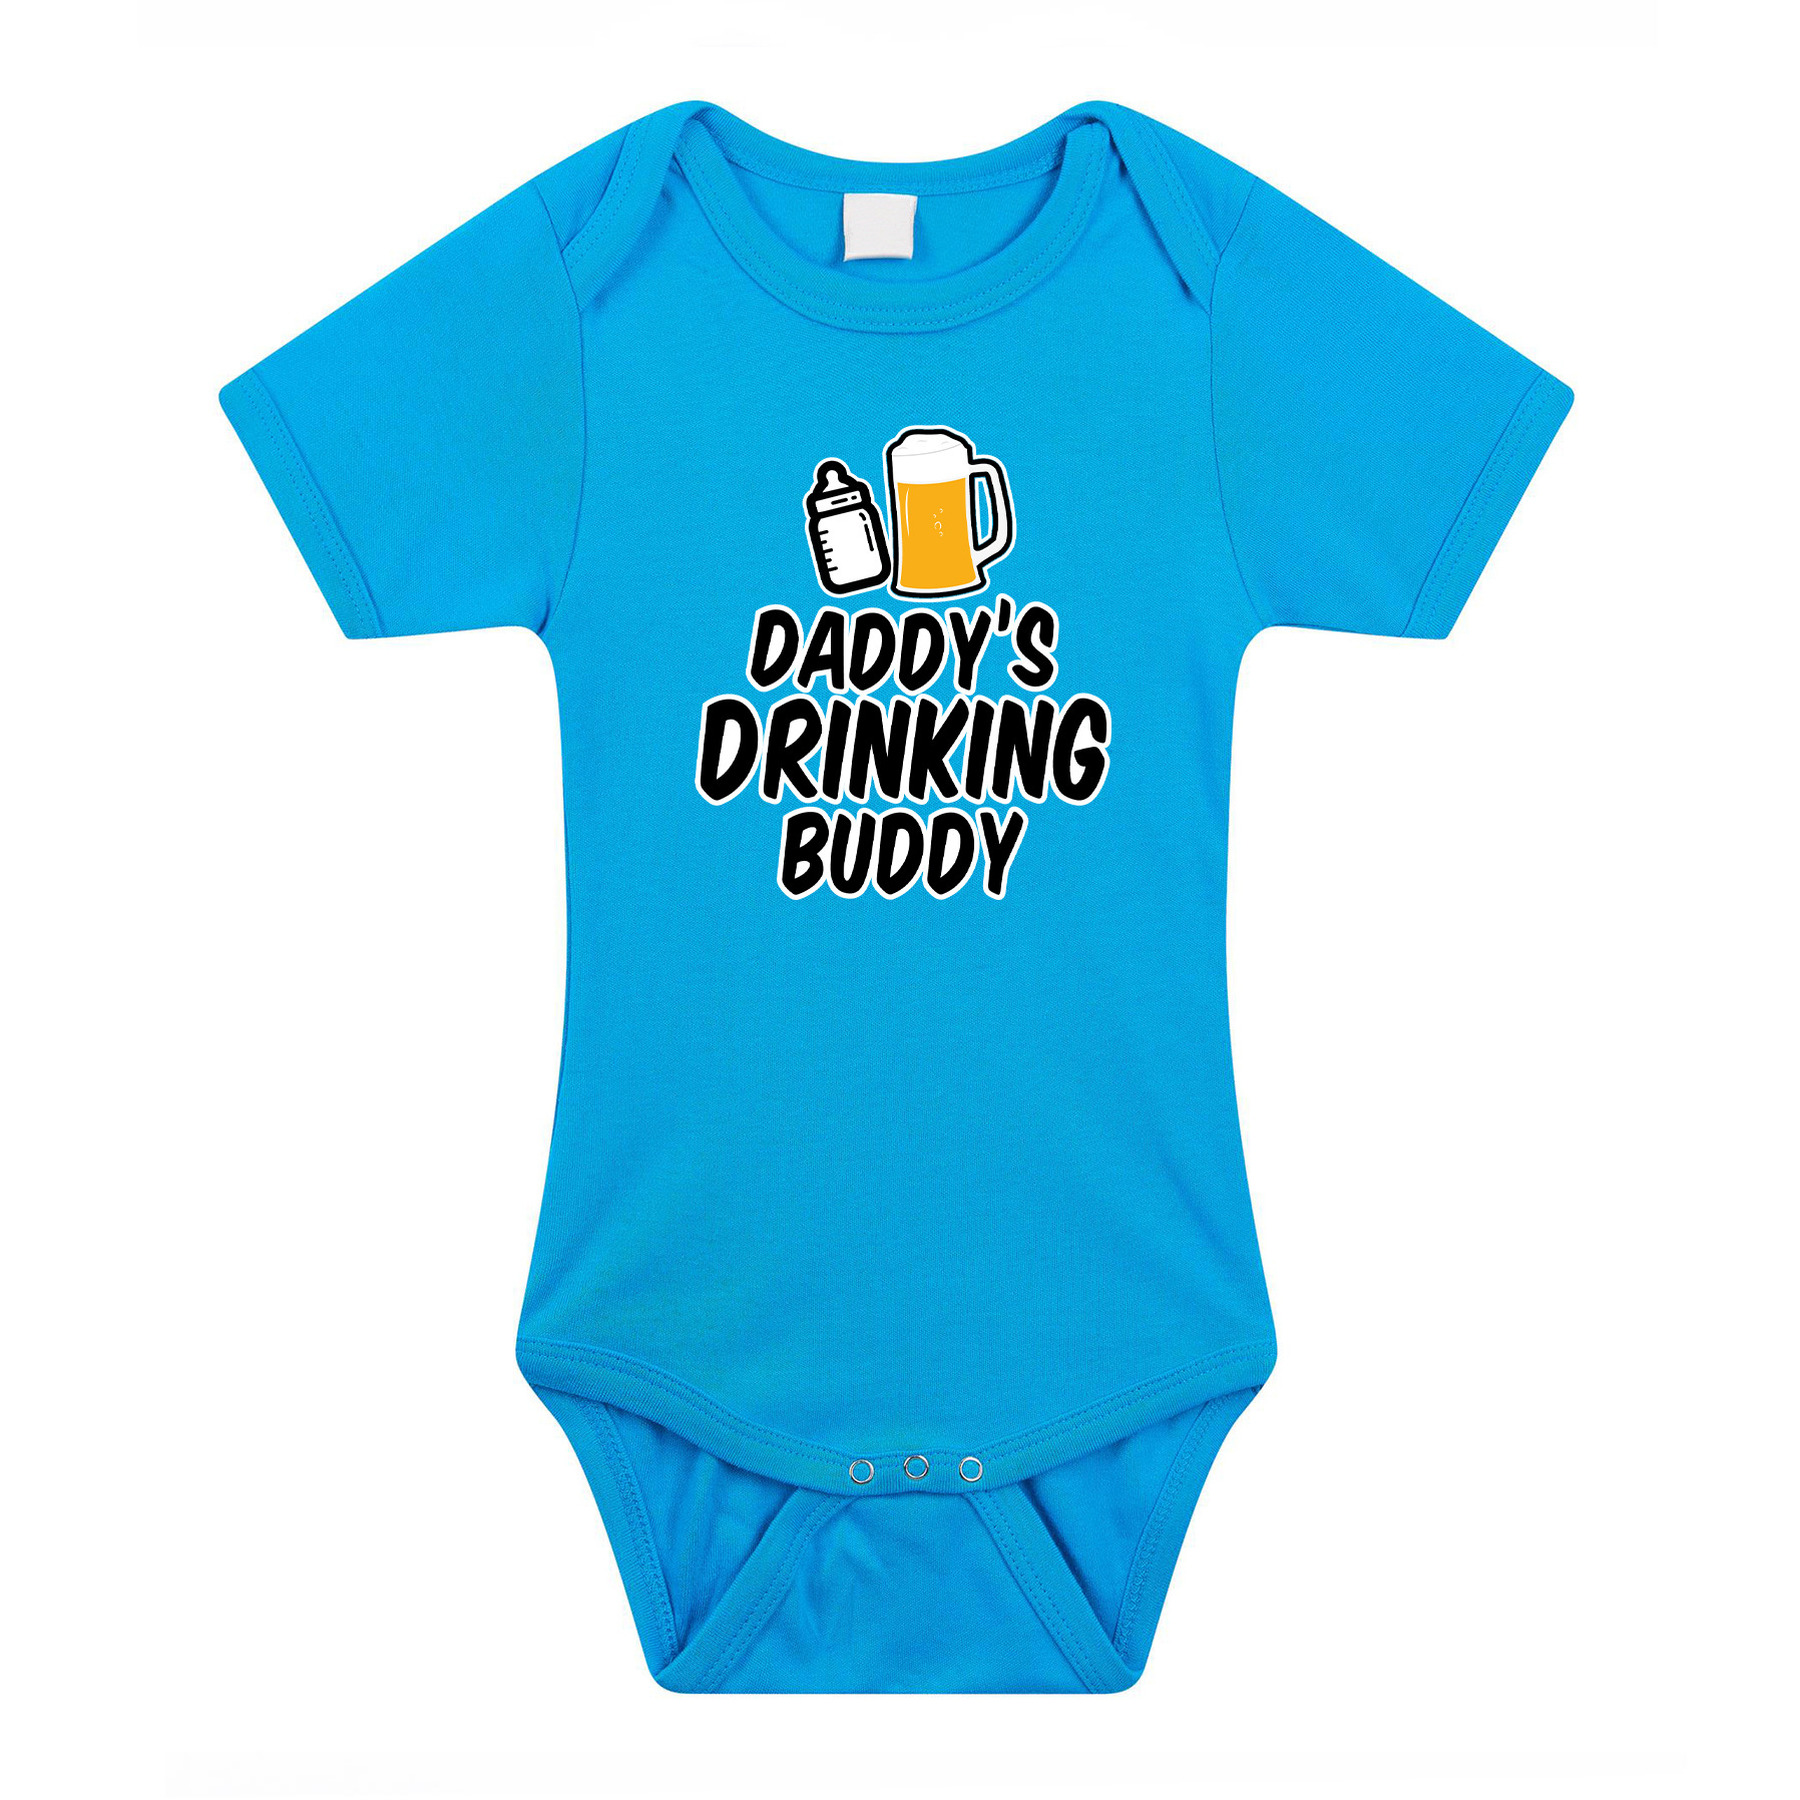 Daddys drinking buddy geboorte cadeau-kraamcadeau romper blauw voor babys